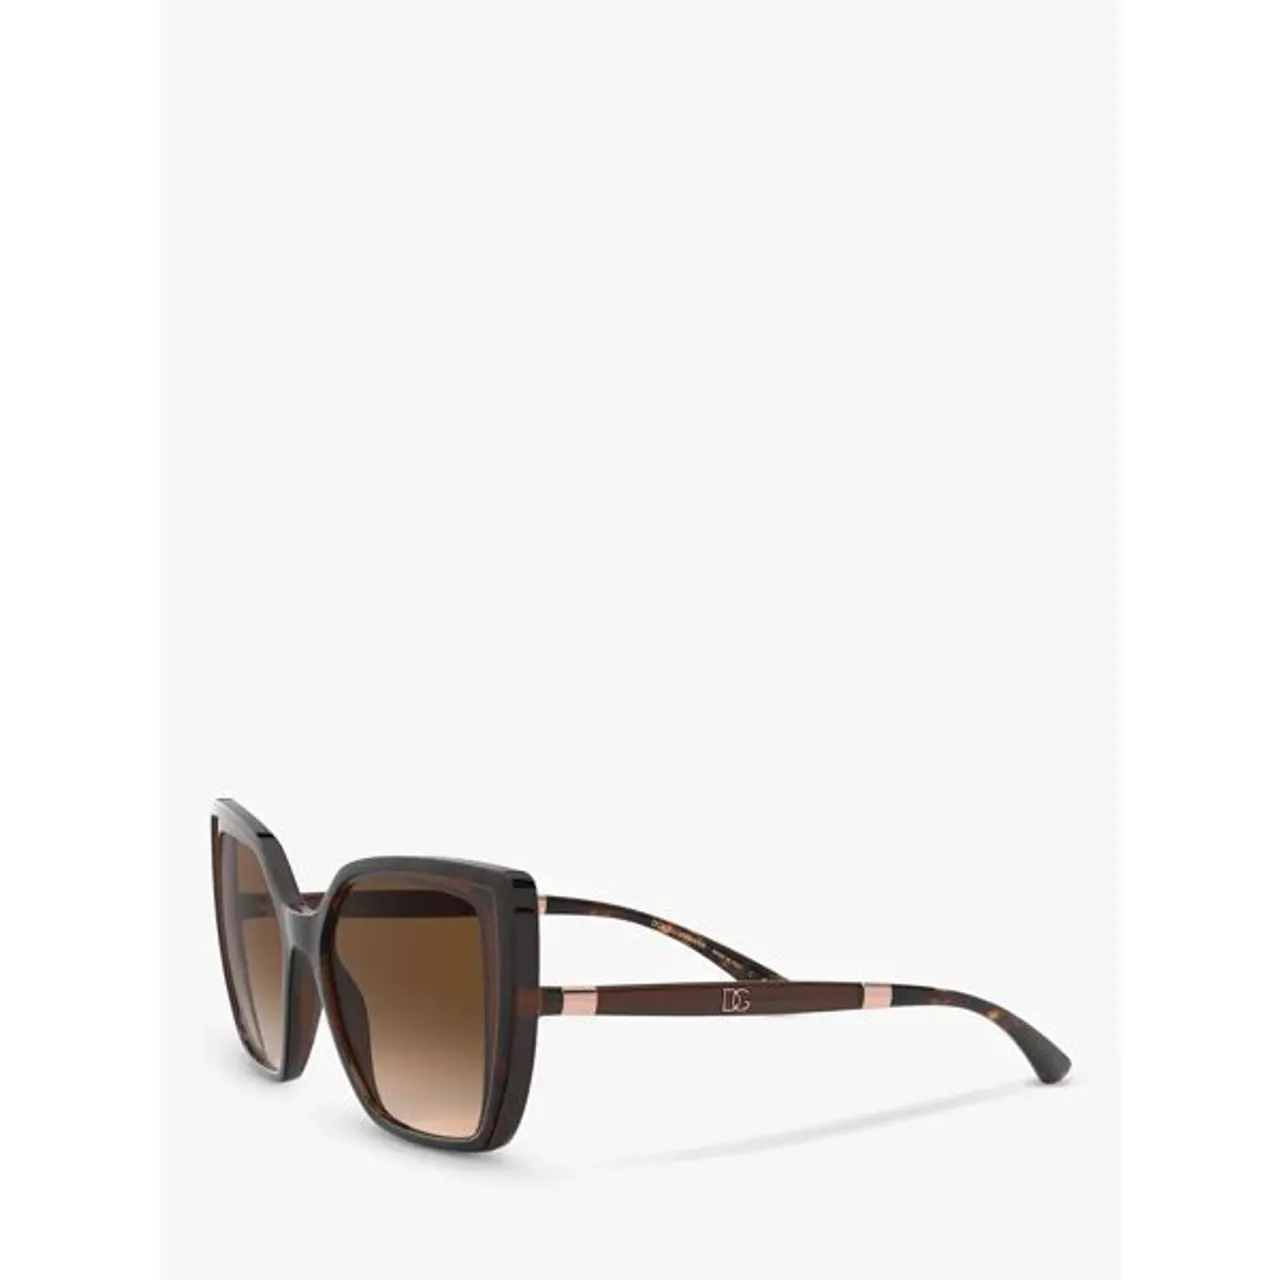 Dolce & Gabbana DG6138 Women's Butterfly Sunglasses, Brown/Brown Gradient - Brown/Brown Gradient - Female